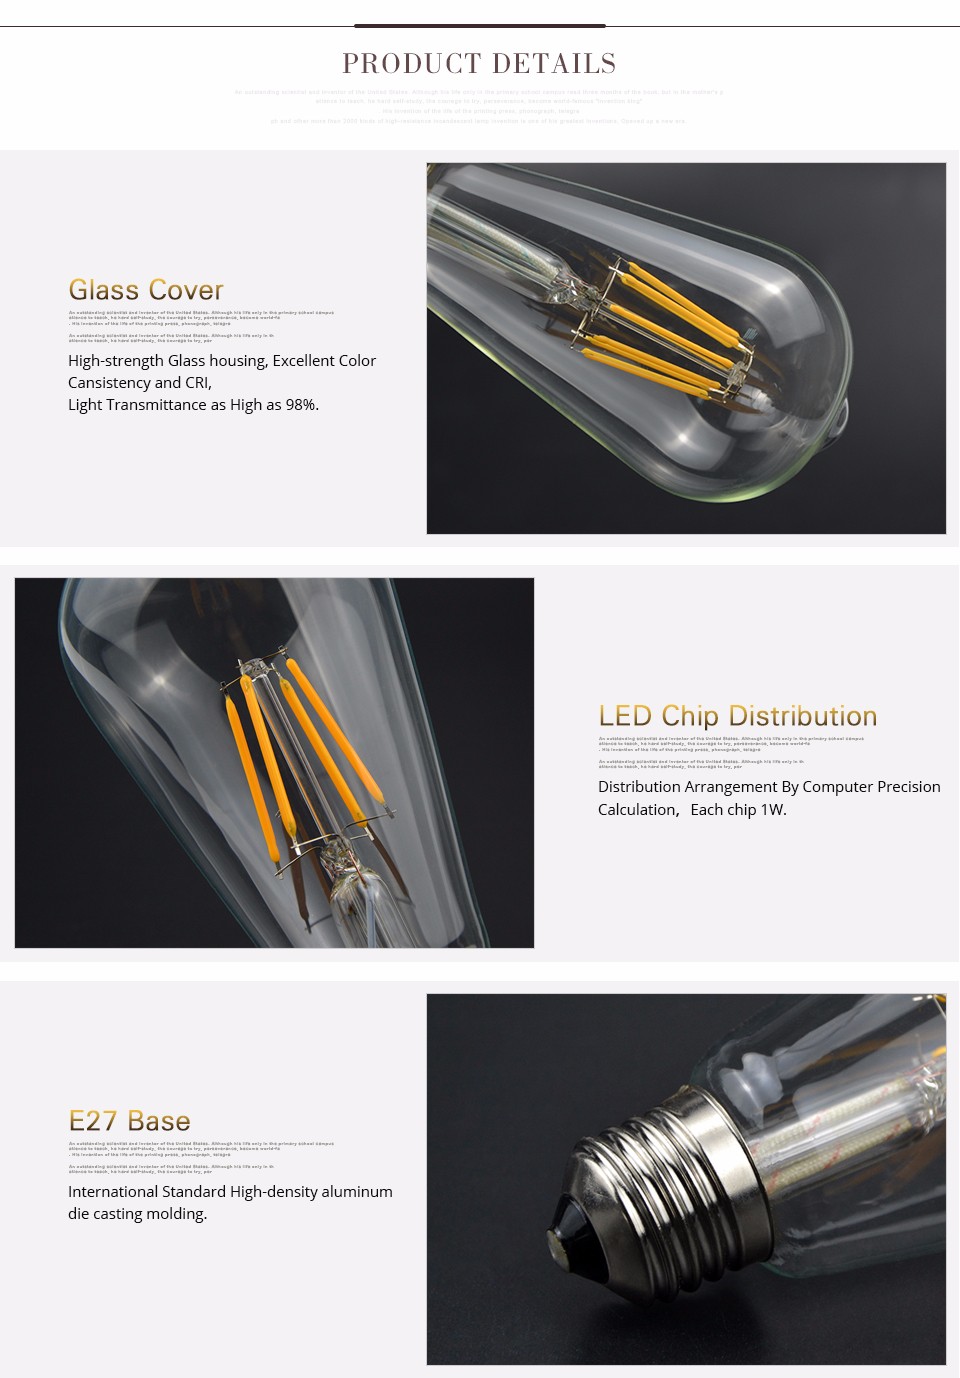 85V 265V 4W 6W 8W Edison Retro LED Filament lamp E27 ST64 COB Decoration Atmosphere Bulb Replace 40W 60W 80W Incandescent